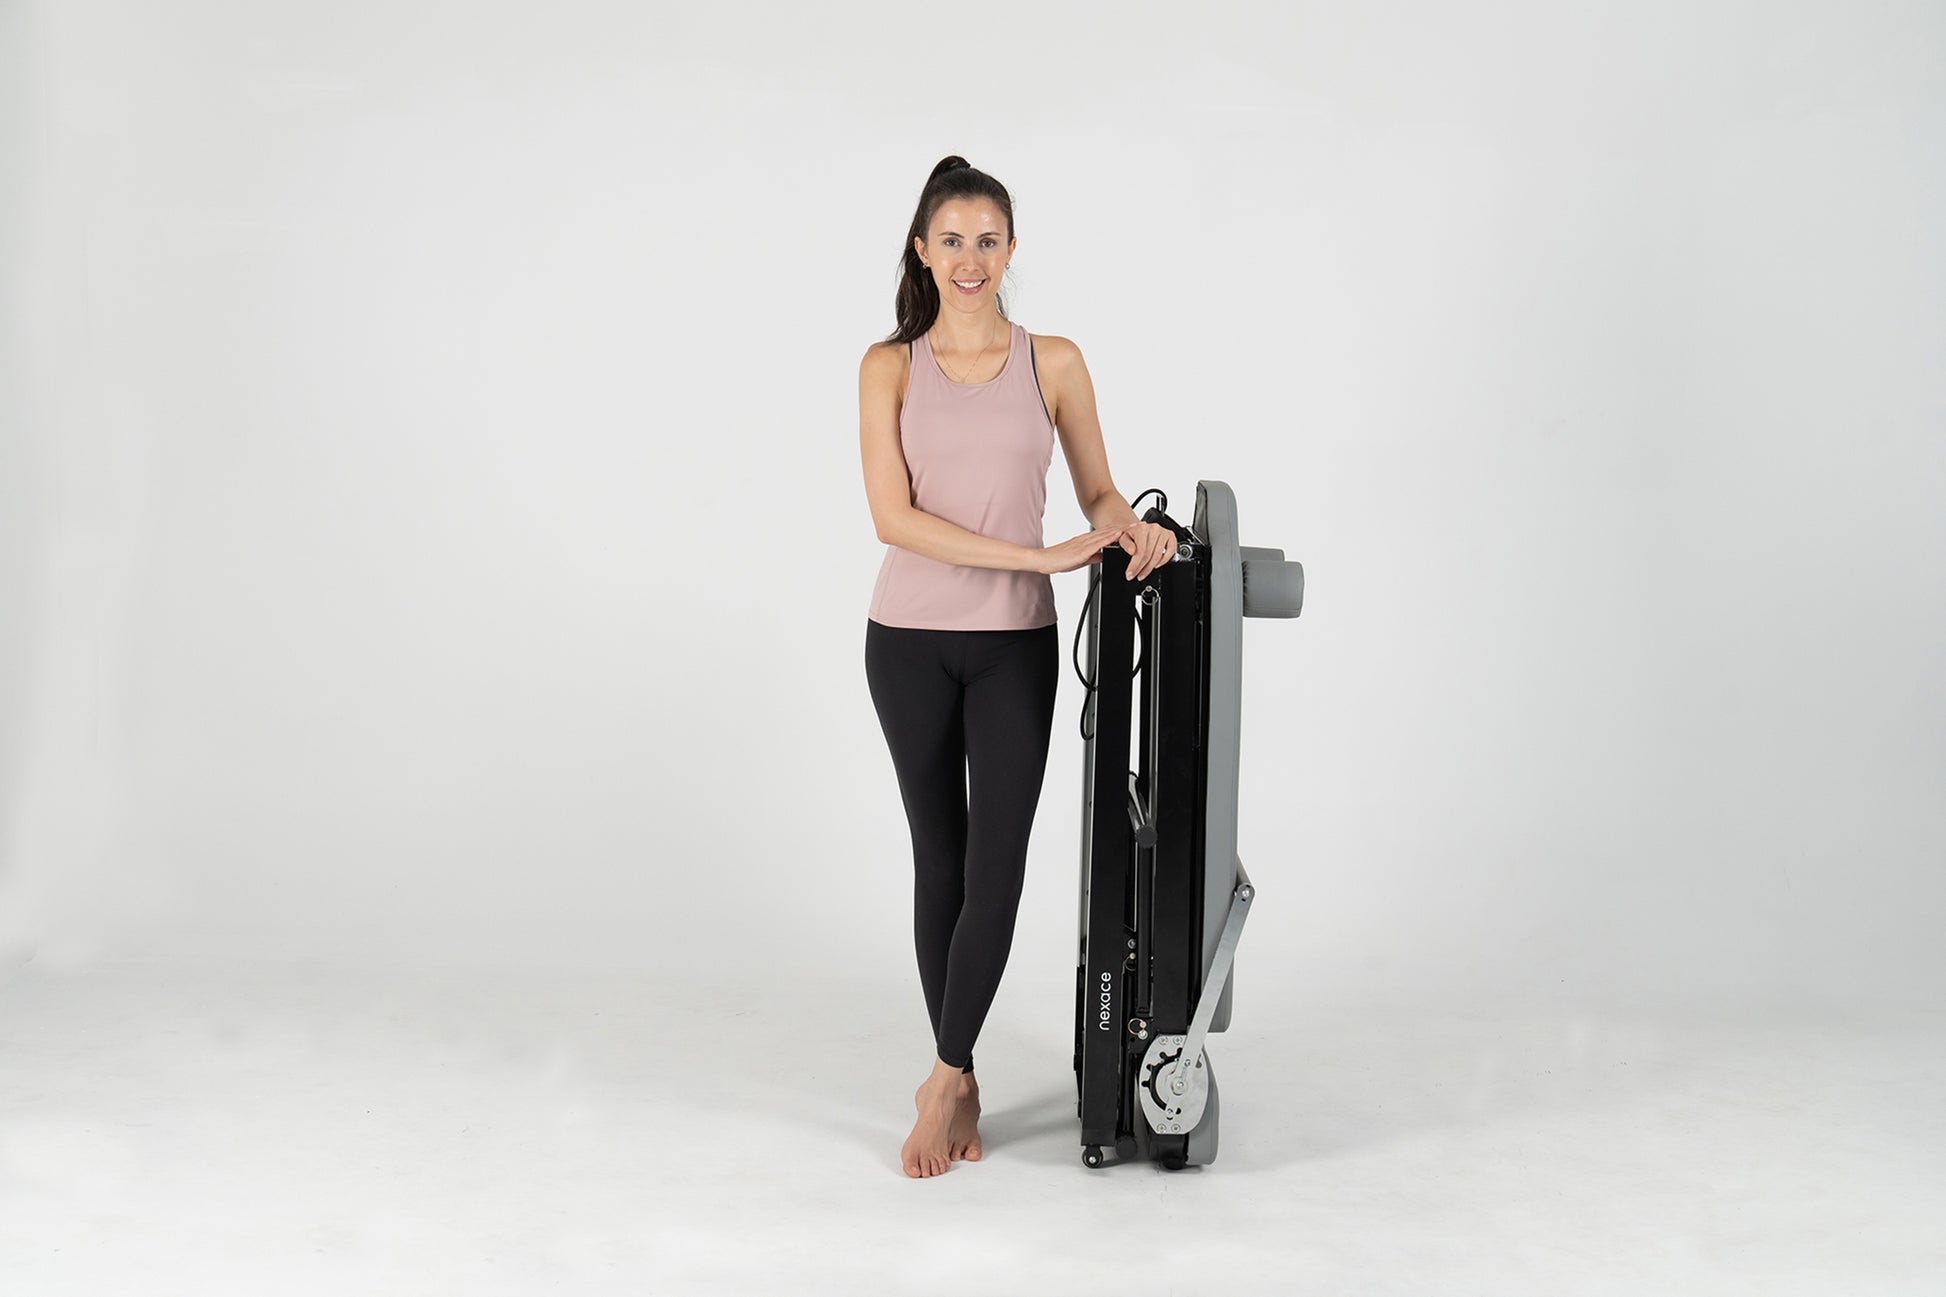  nexace Pilates Reformer Machine ,Foldable Pilates Machine  Equipment for Home : Sports & Outdoors